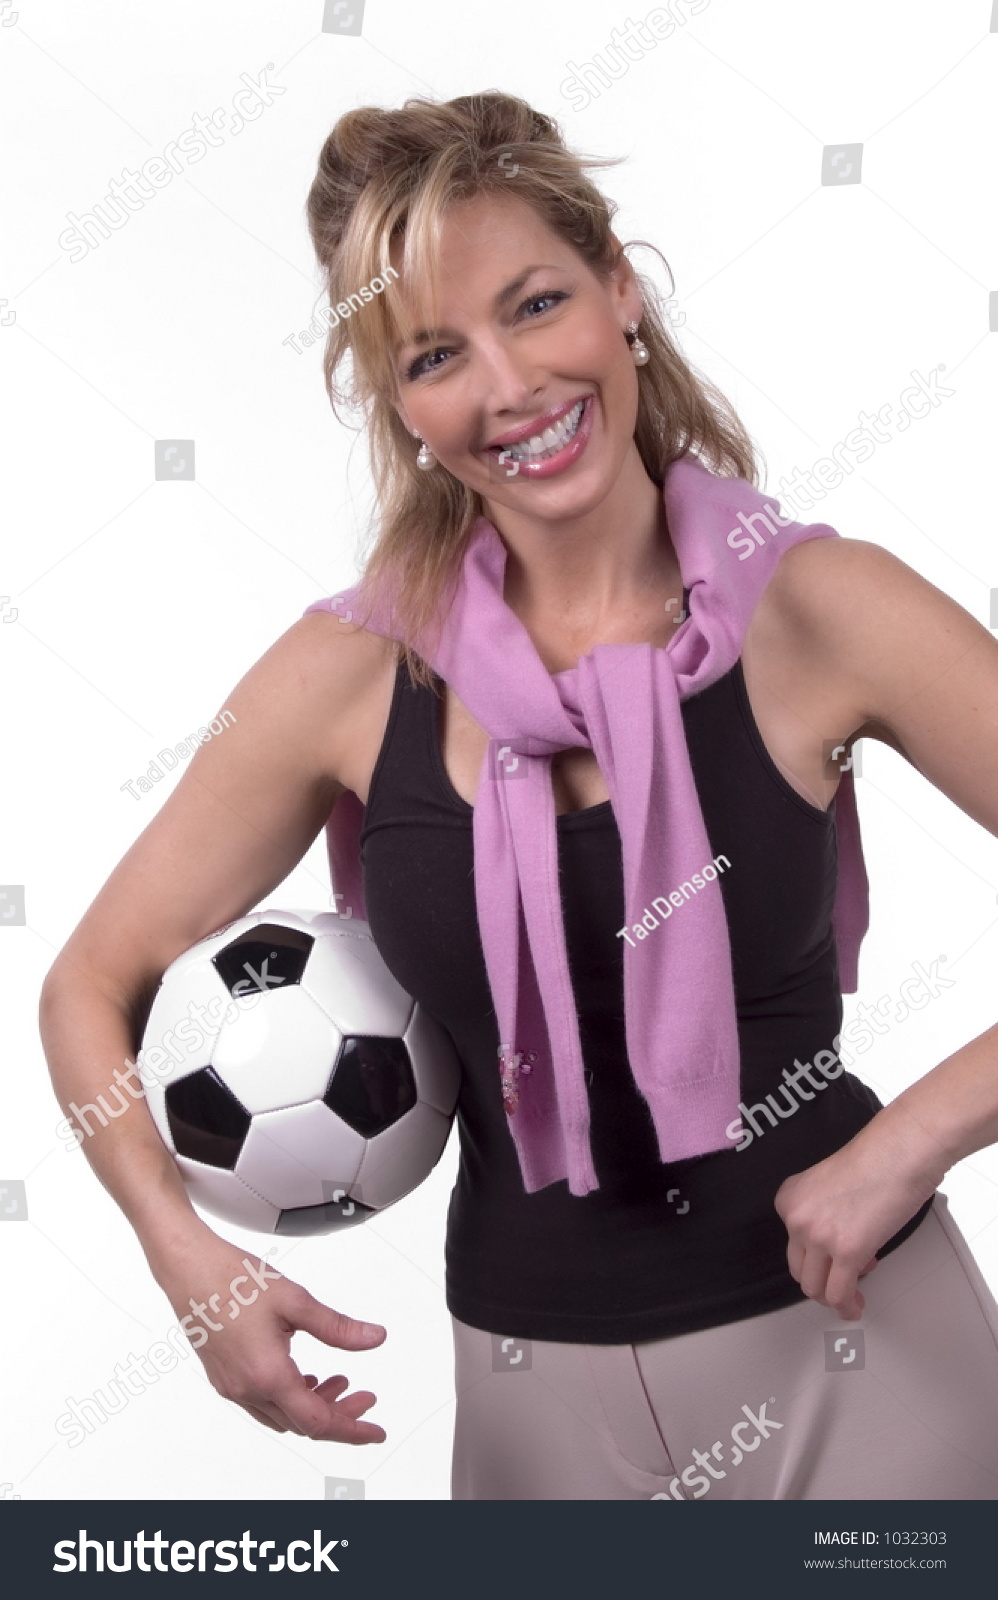 Стоковая фотография 1032303: 30s 40s Woman Smiling Soccer Ball Shutterstock...